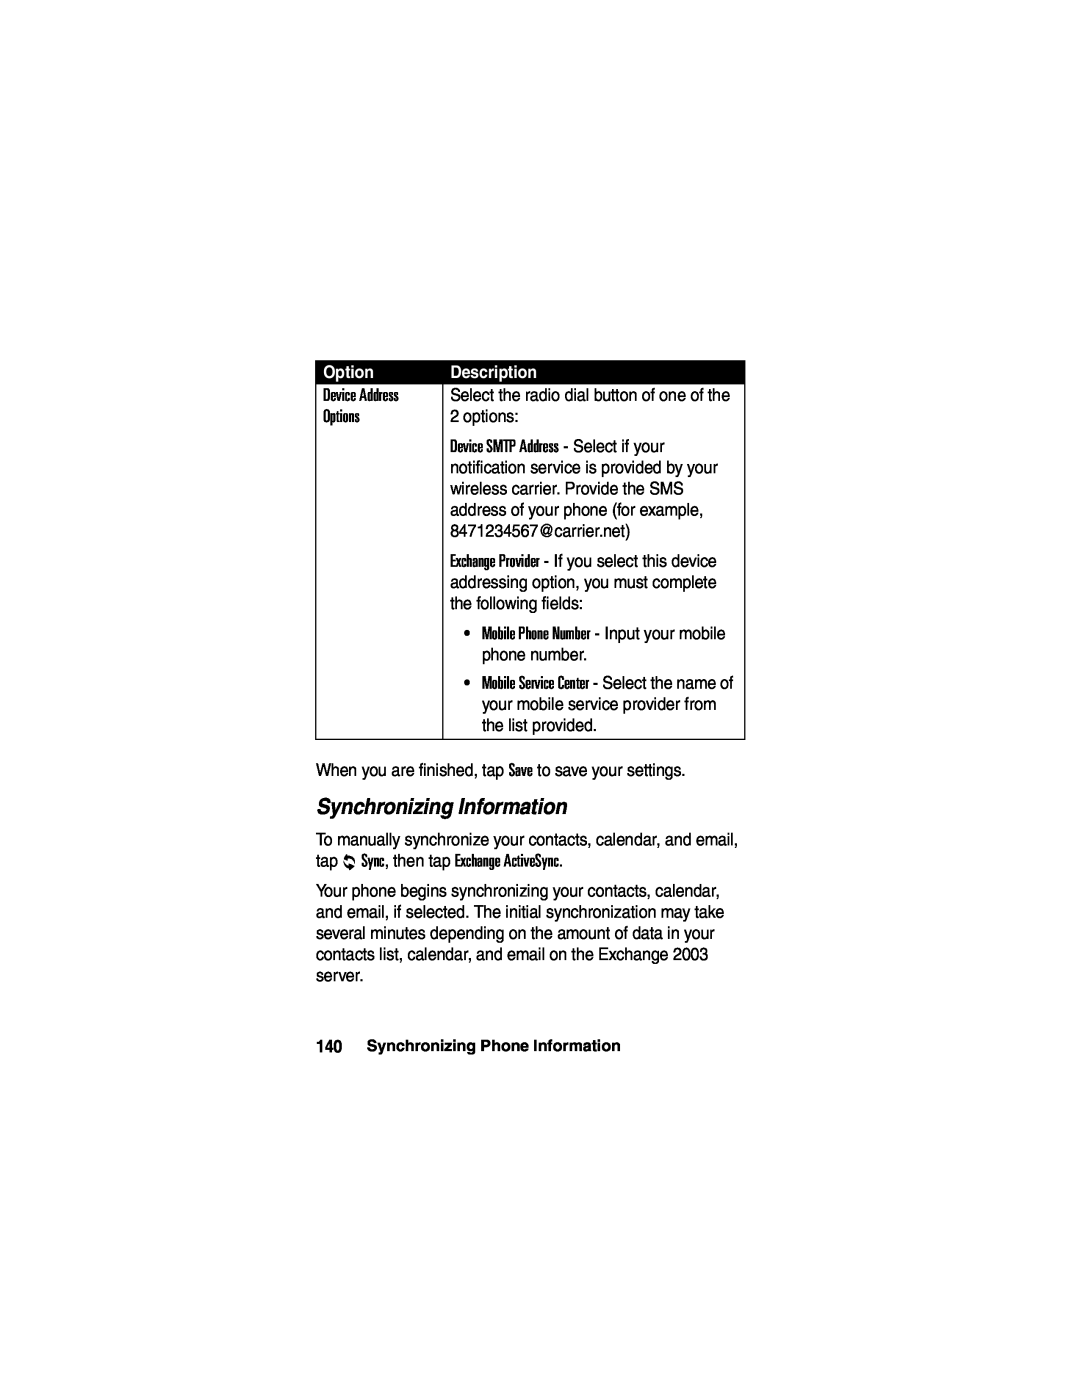 Motorola A780 manual Synchronizing Information, Option, Description 